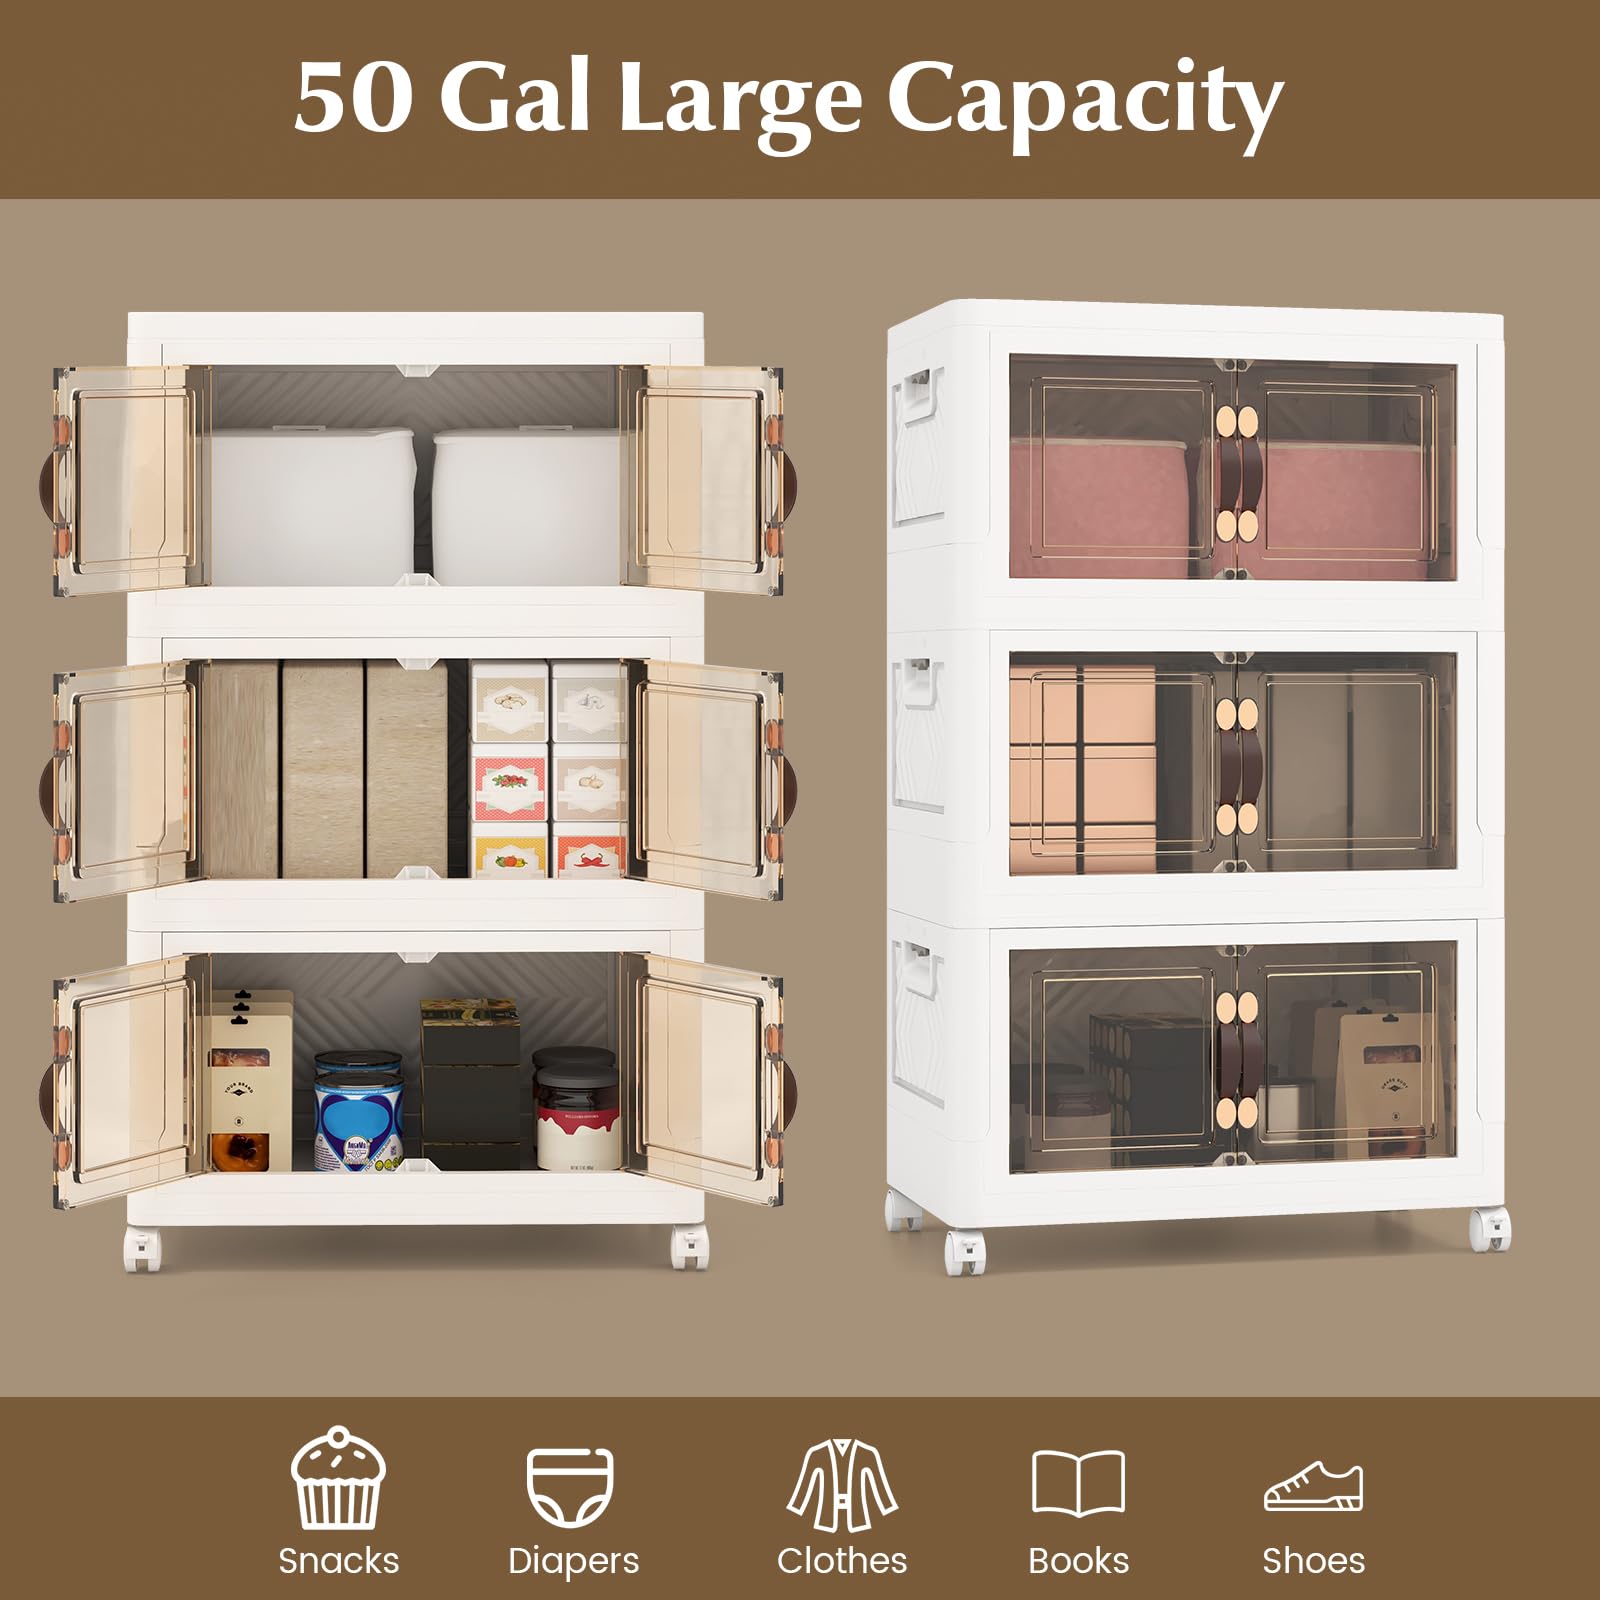 Giantex 3-Pack Storage Bins with Lids and Wheels, 50 Gal Total Capacity